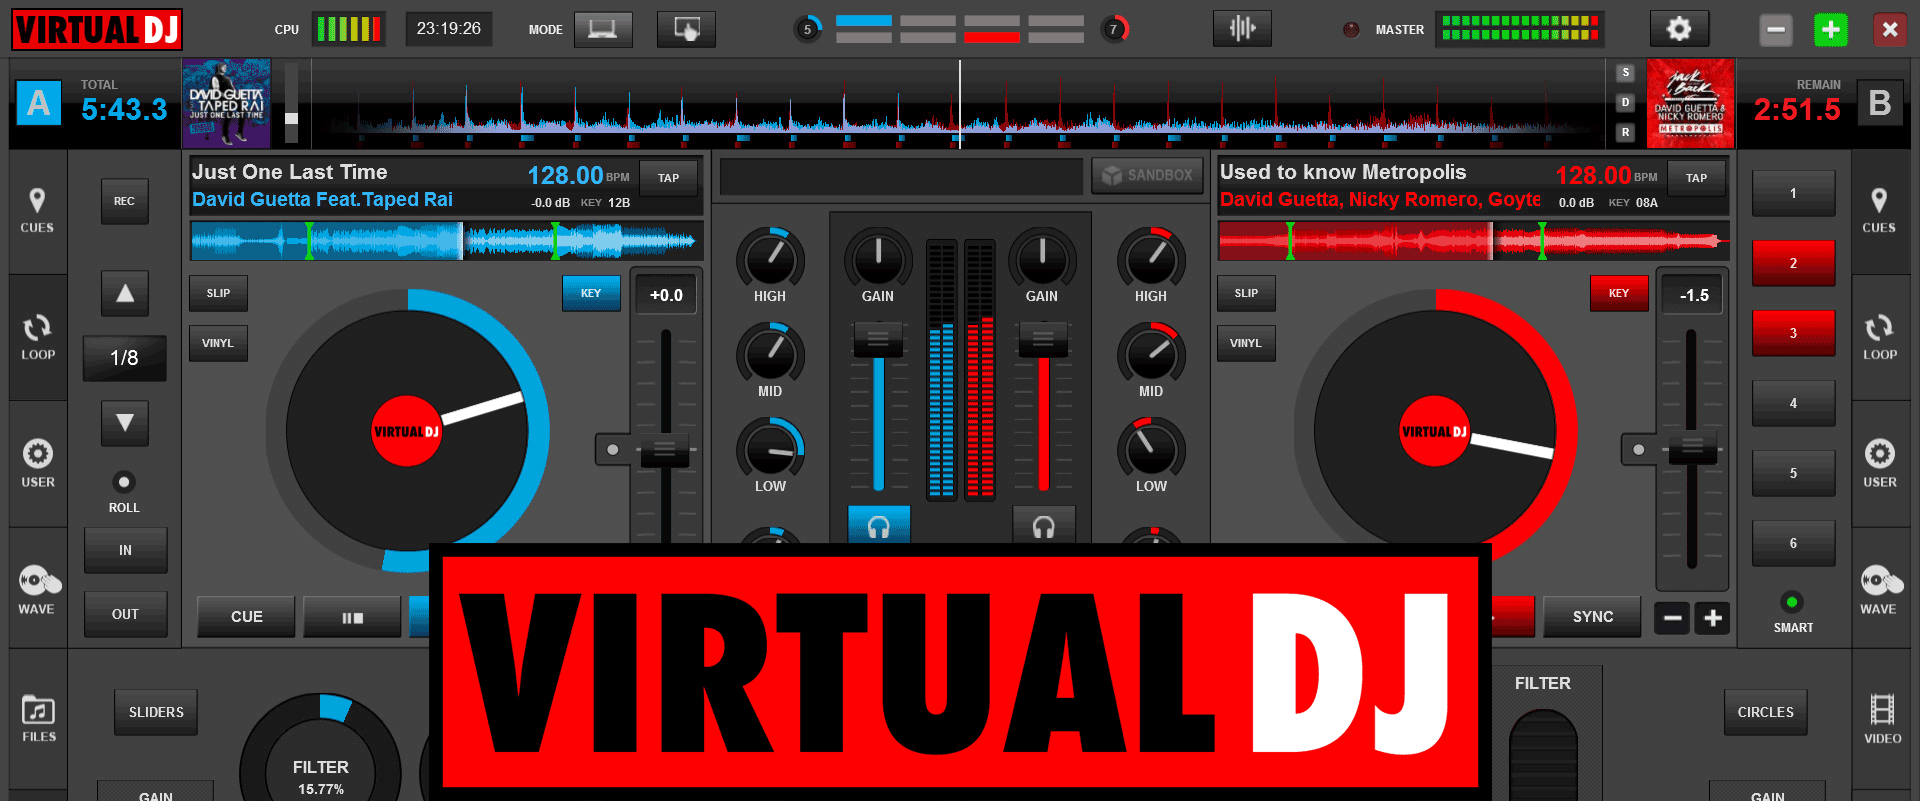 Virtual dj 10 free download